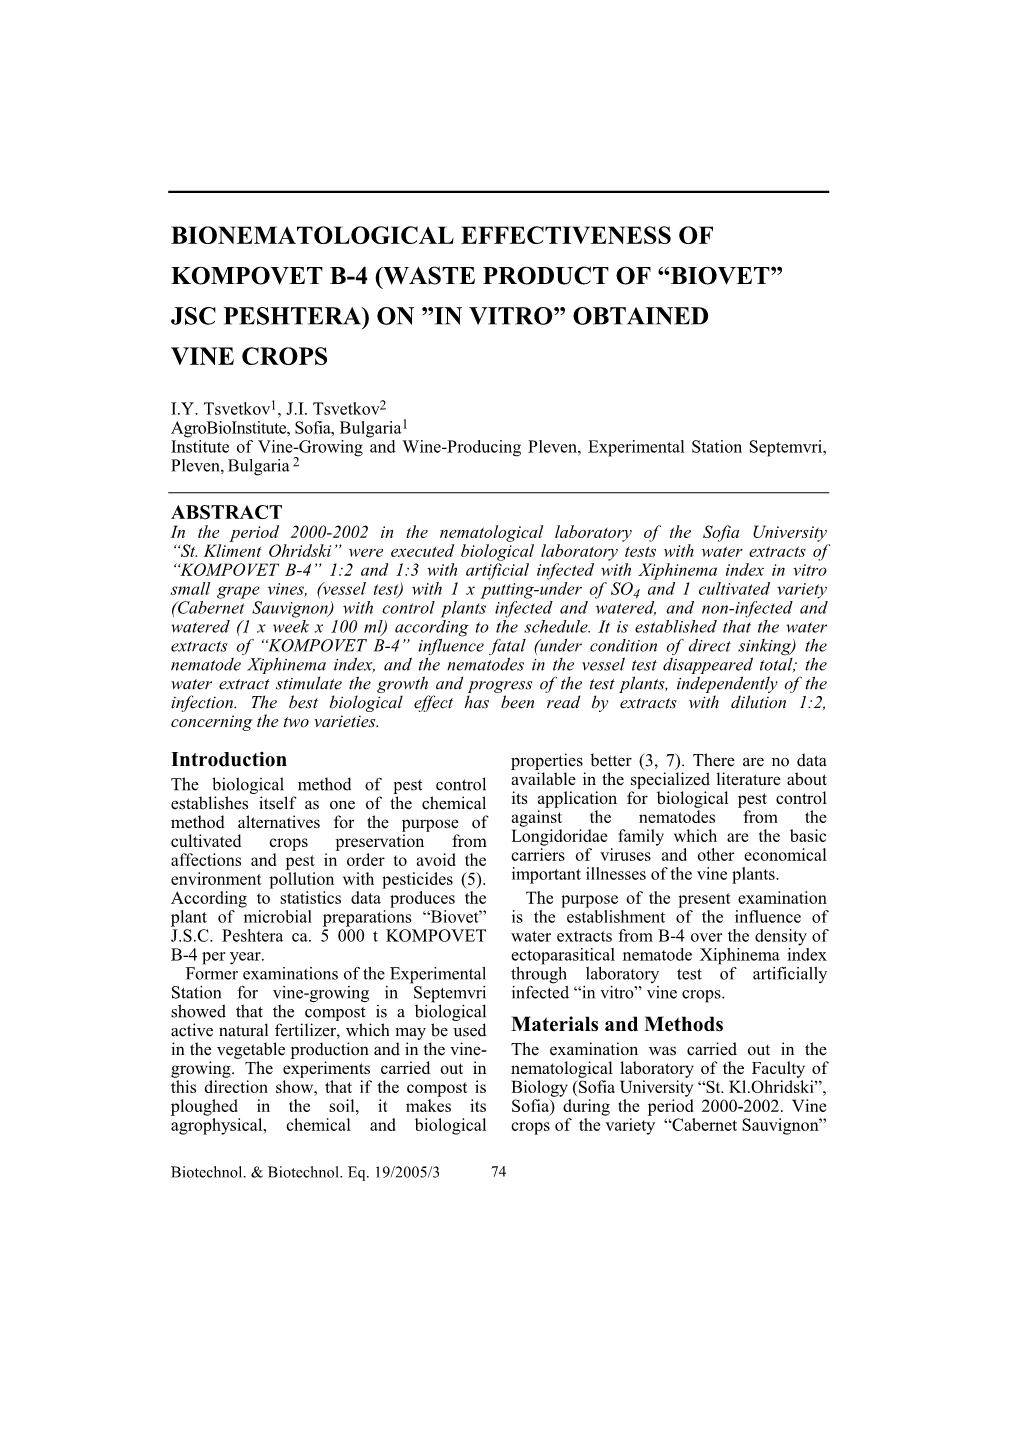 Bionematological Effectiveness of Kompovet B-4 (Waste Product of “Biovet” Jsc Peshtera) on ”In Vitro” Obtained Vine Crops